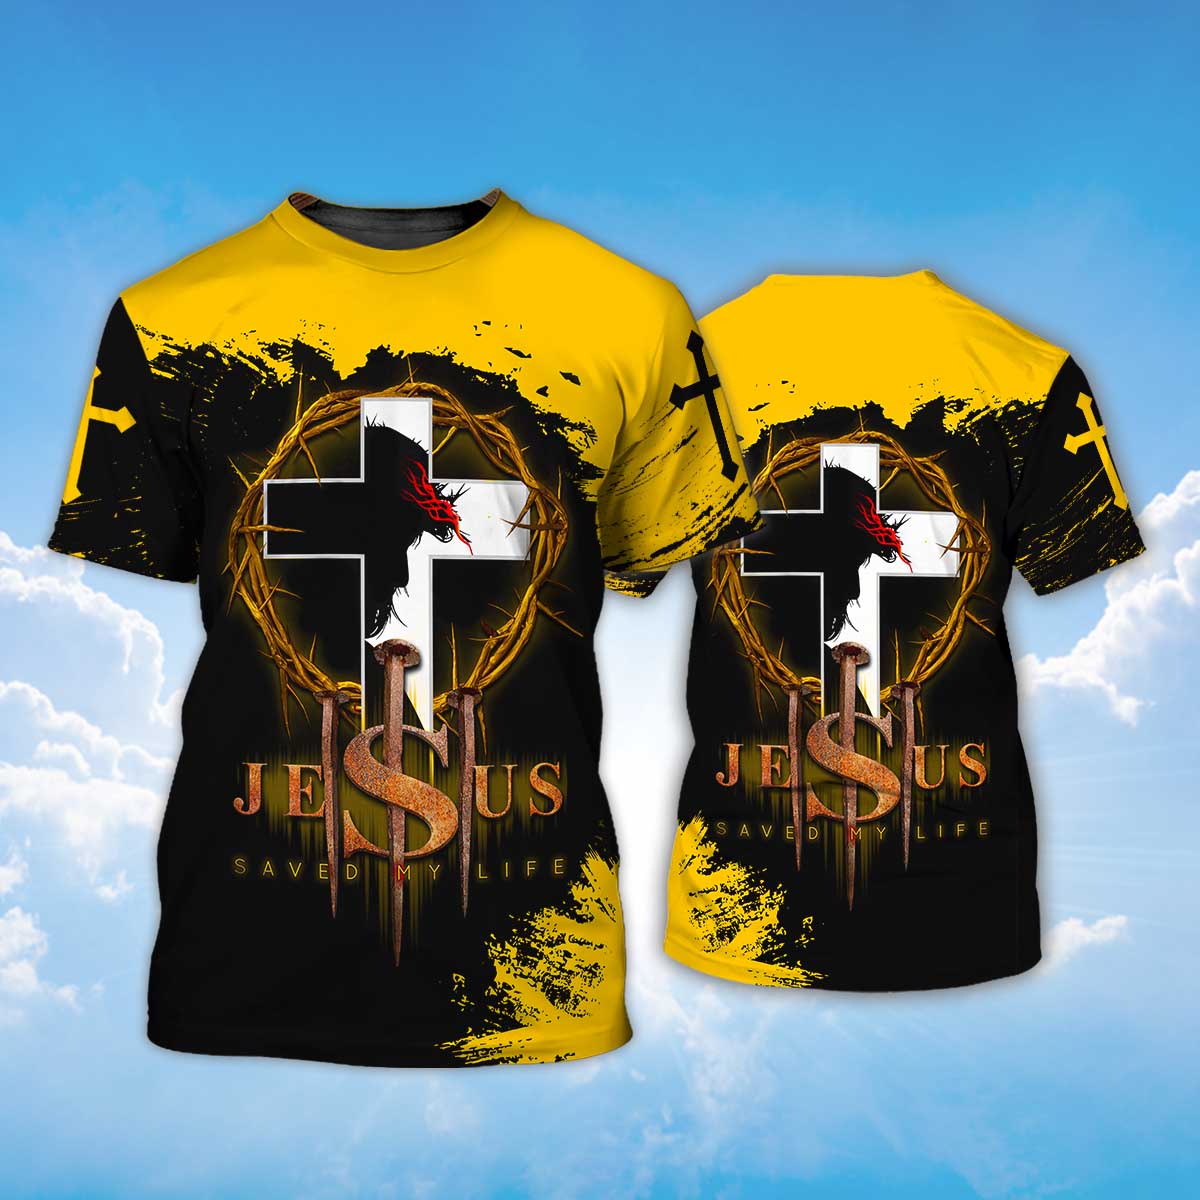 Jesus Christ Saved My Life Shirt Men Women Yellow And Black Color T Shirt Coolspod